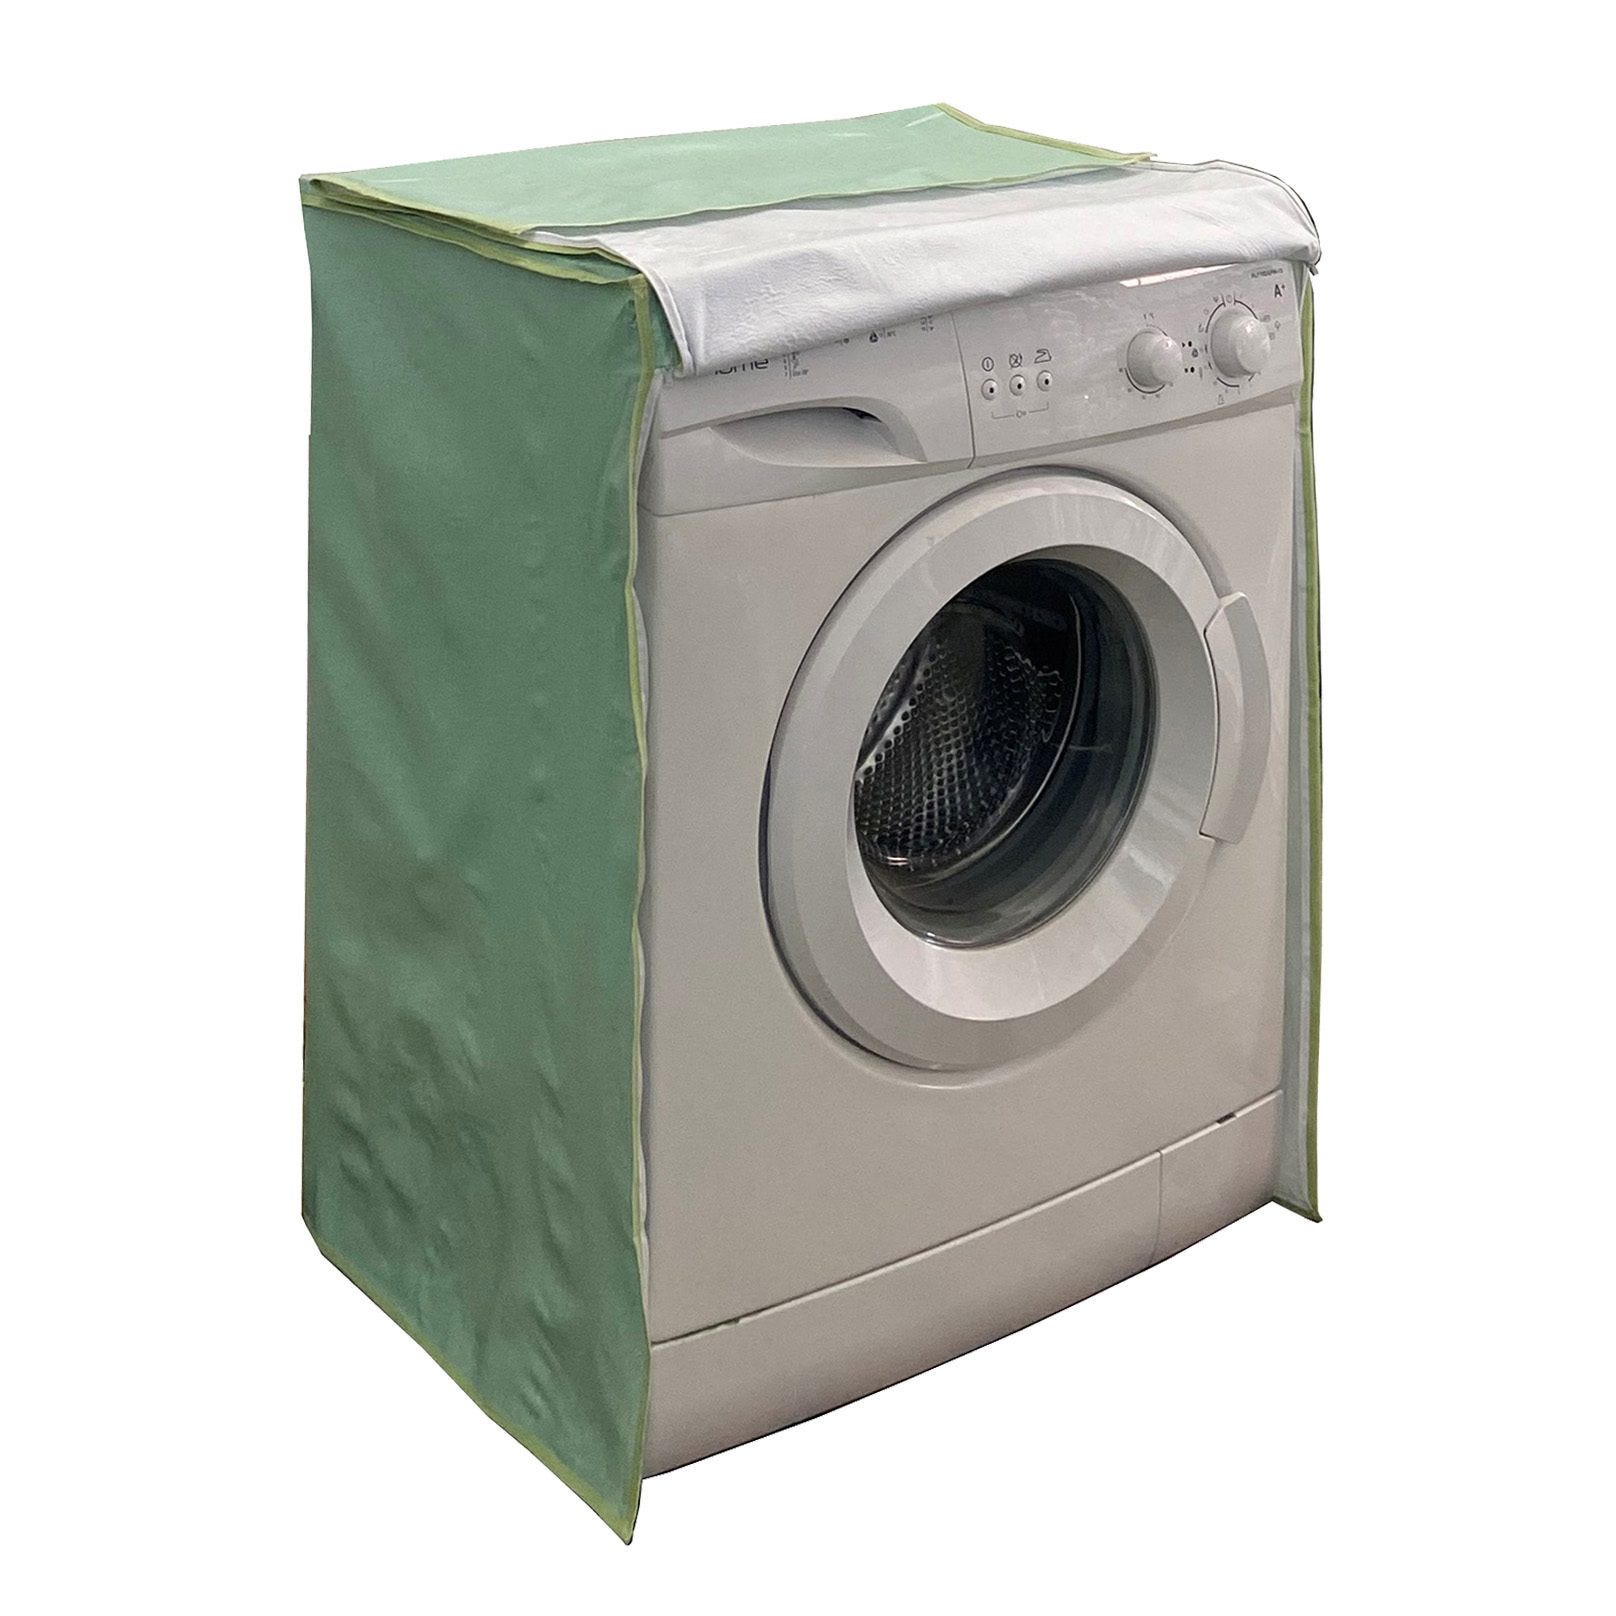 Funda para lavadora exterior impermeable carga frontal - verde 0501001-5